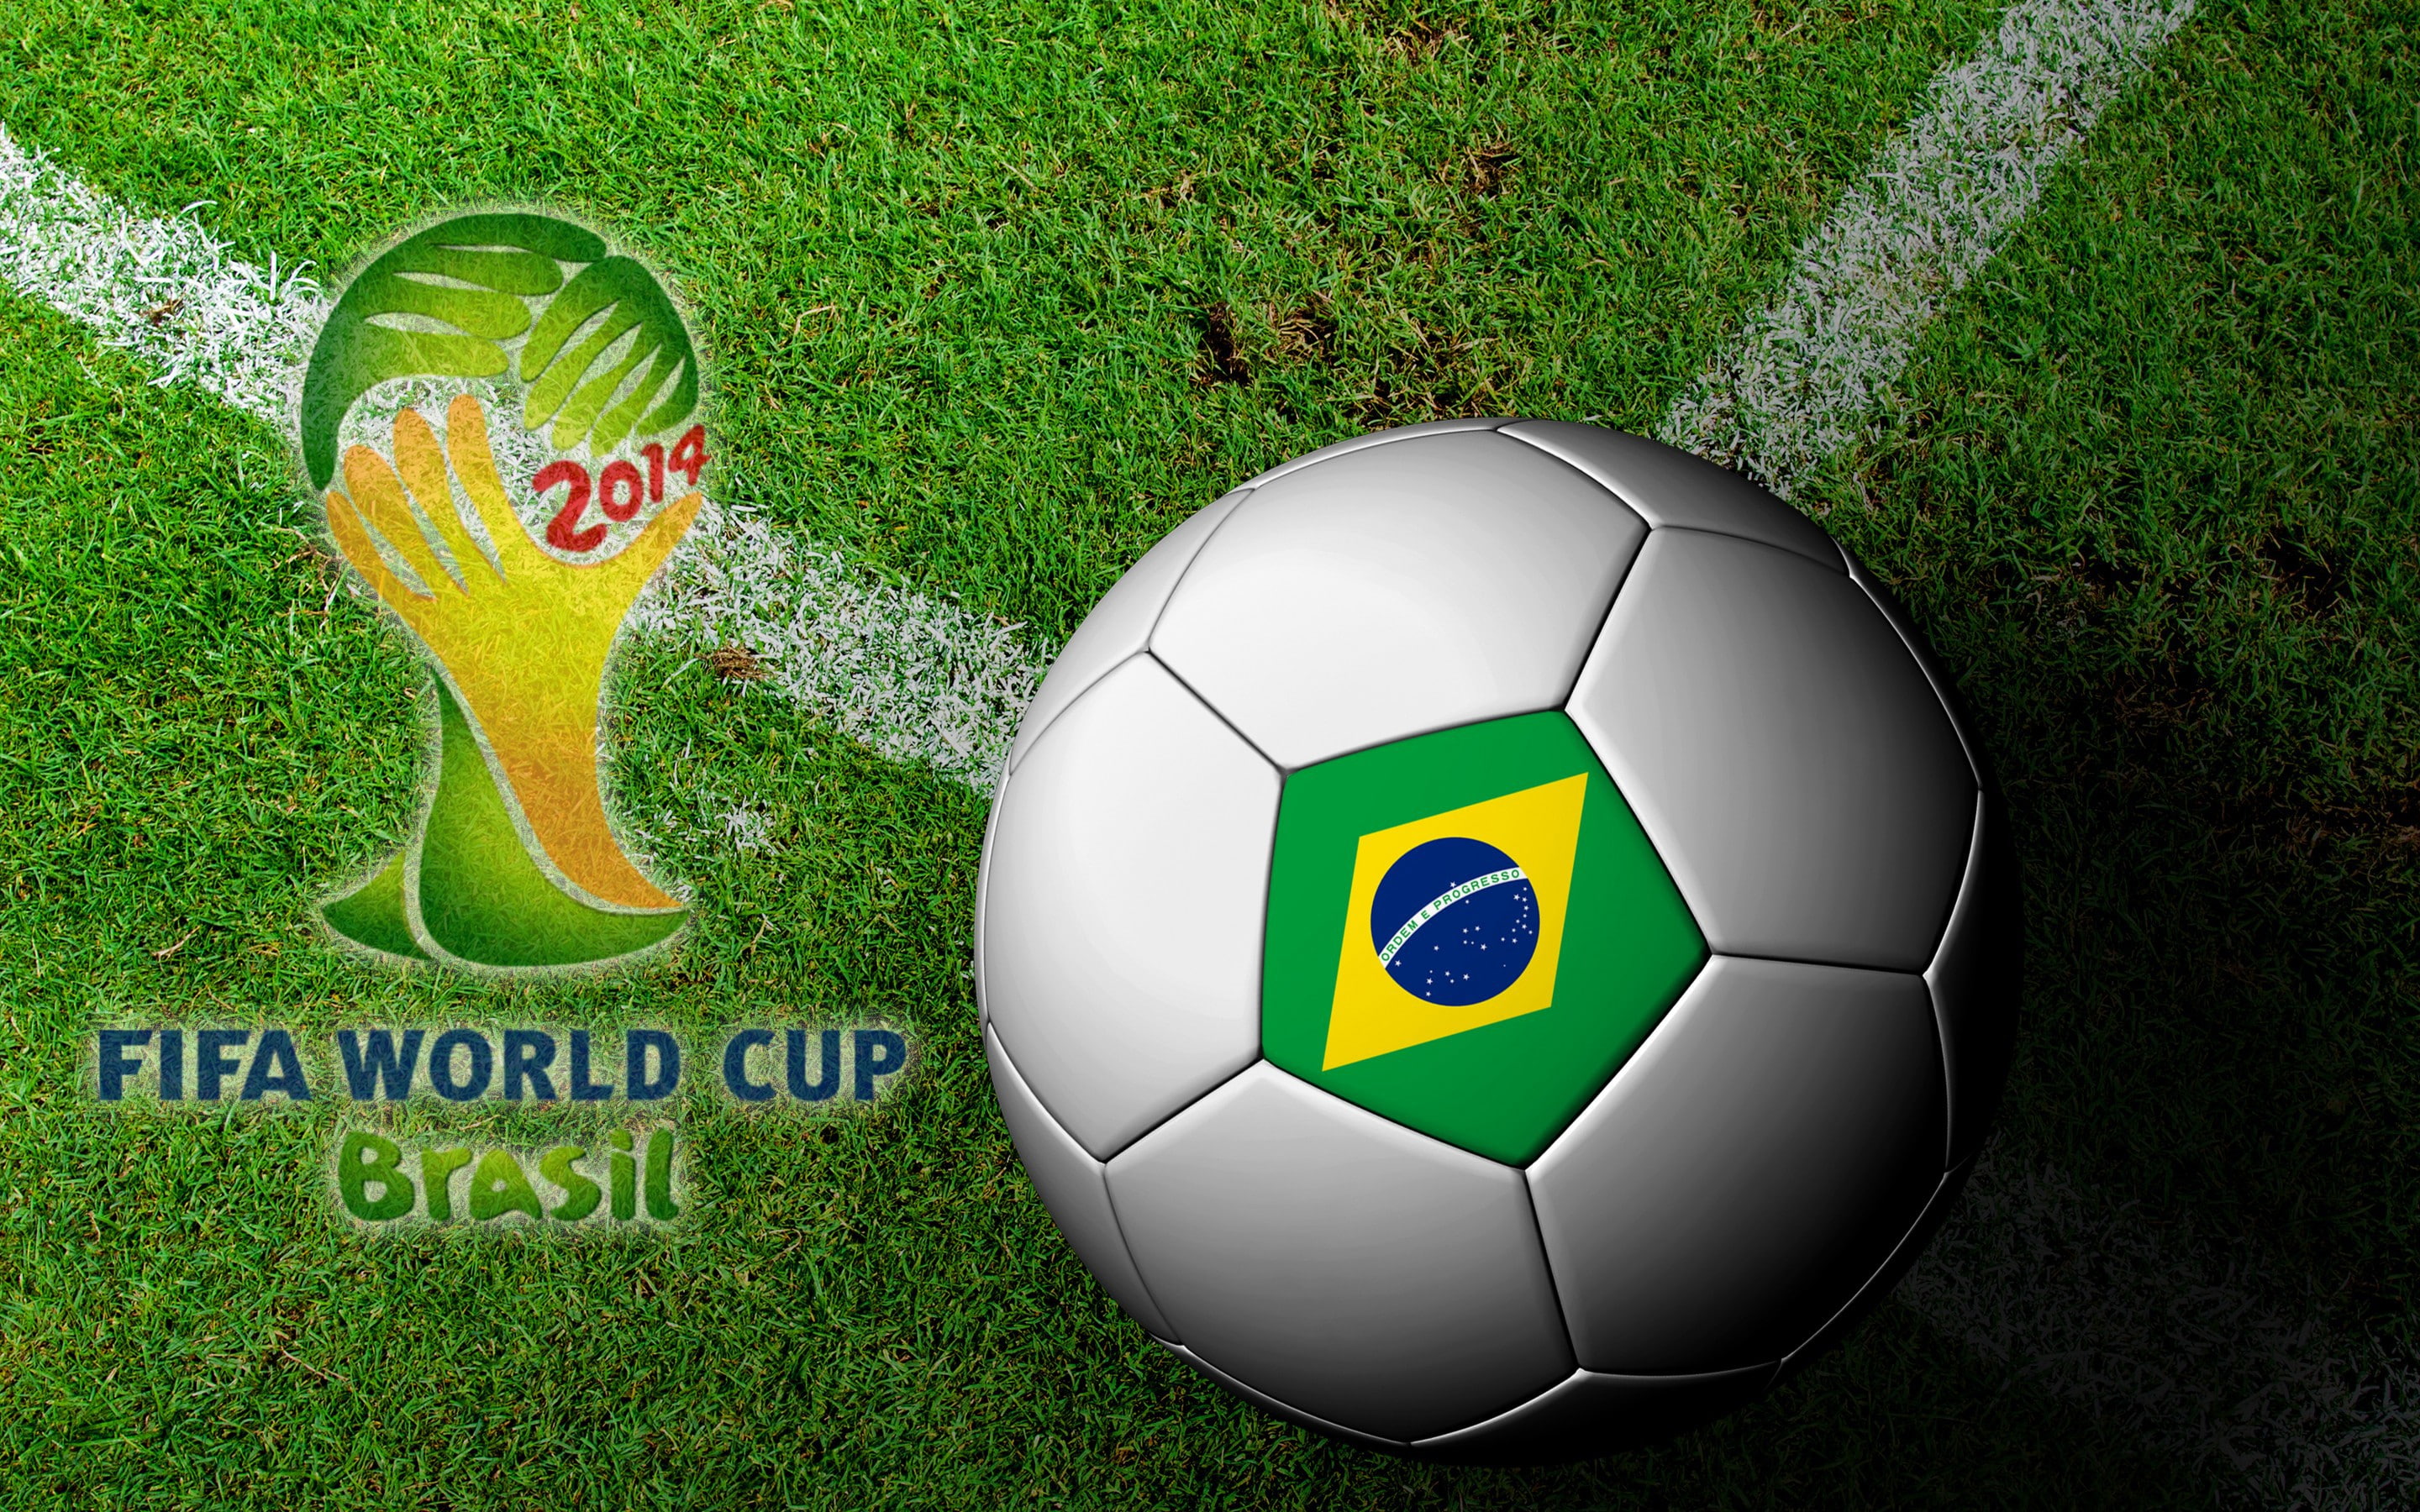 Fifa world Cup 2014, fifa world cup brasil ads, sport, football